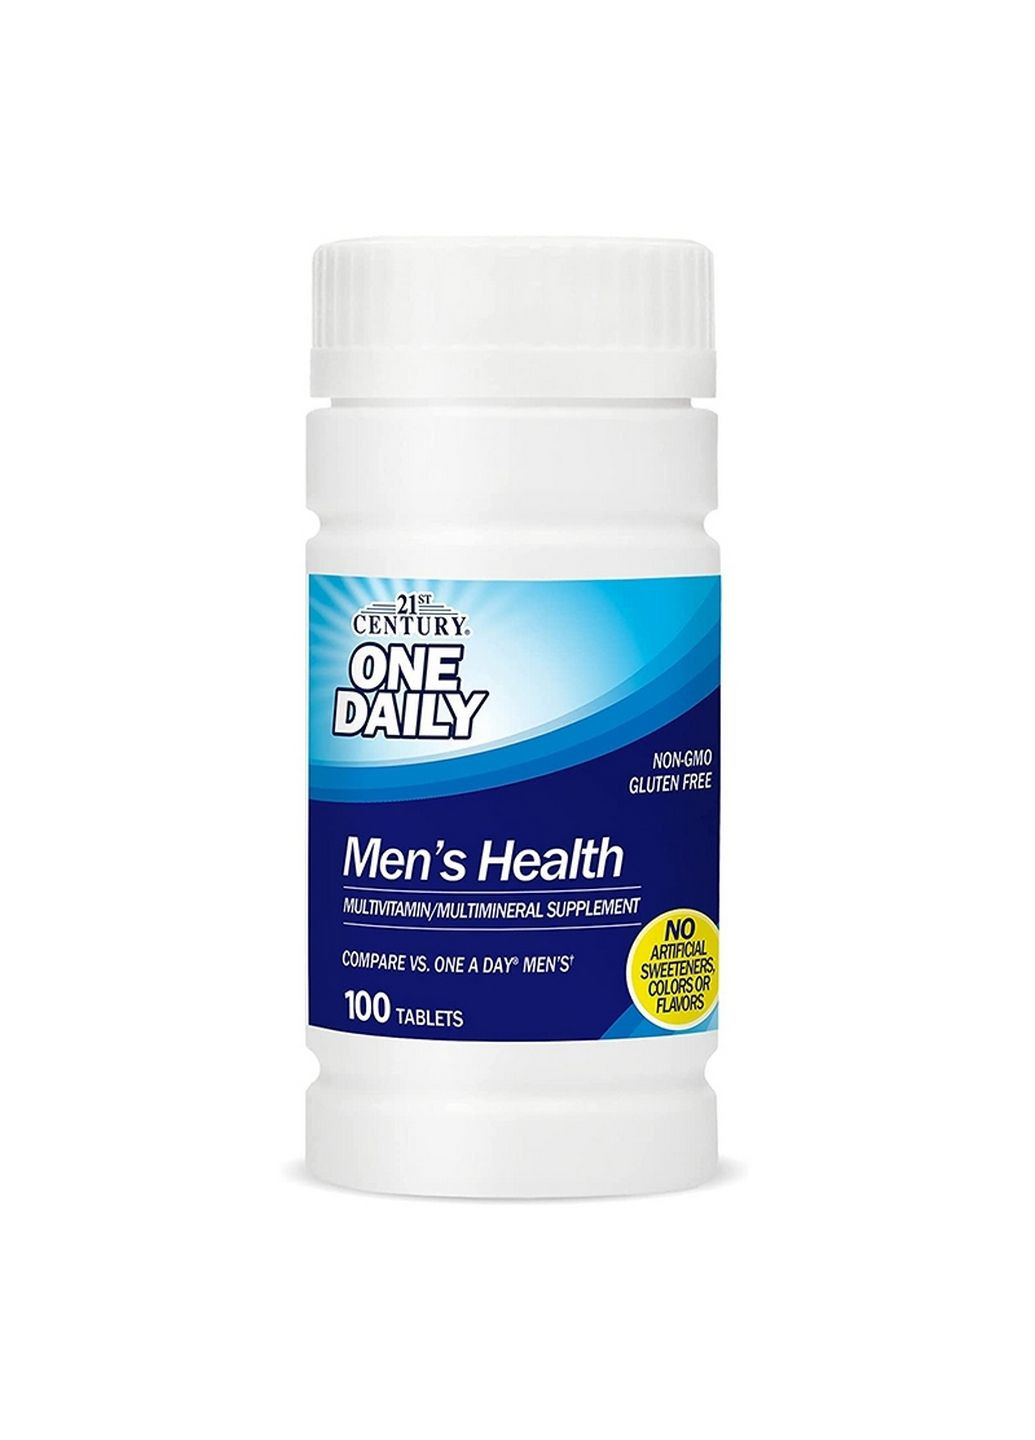 Витамины и минералы One Daily Men's Health, 100 таблеток 21st Century (293338658)